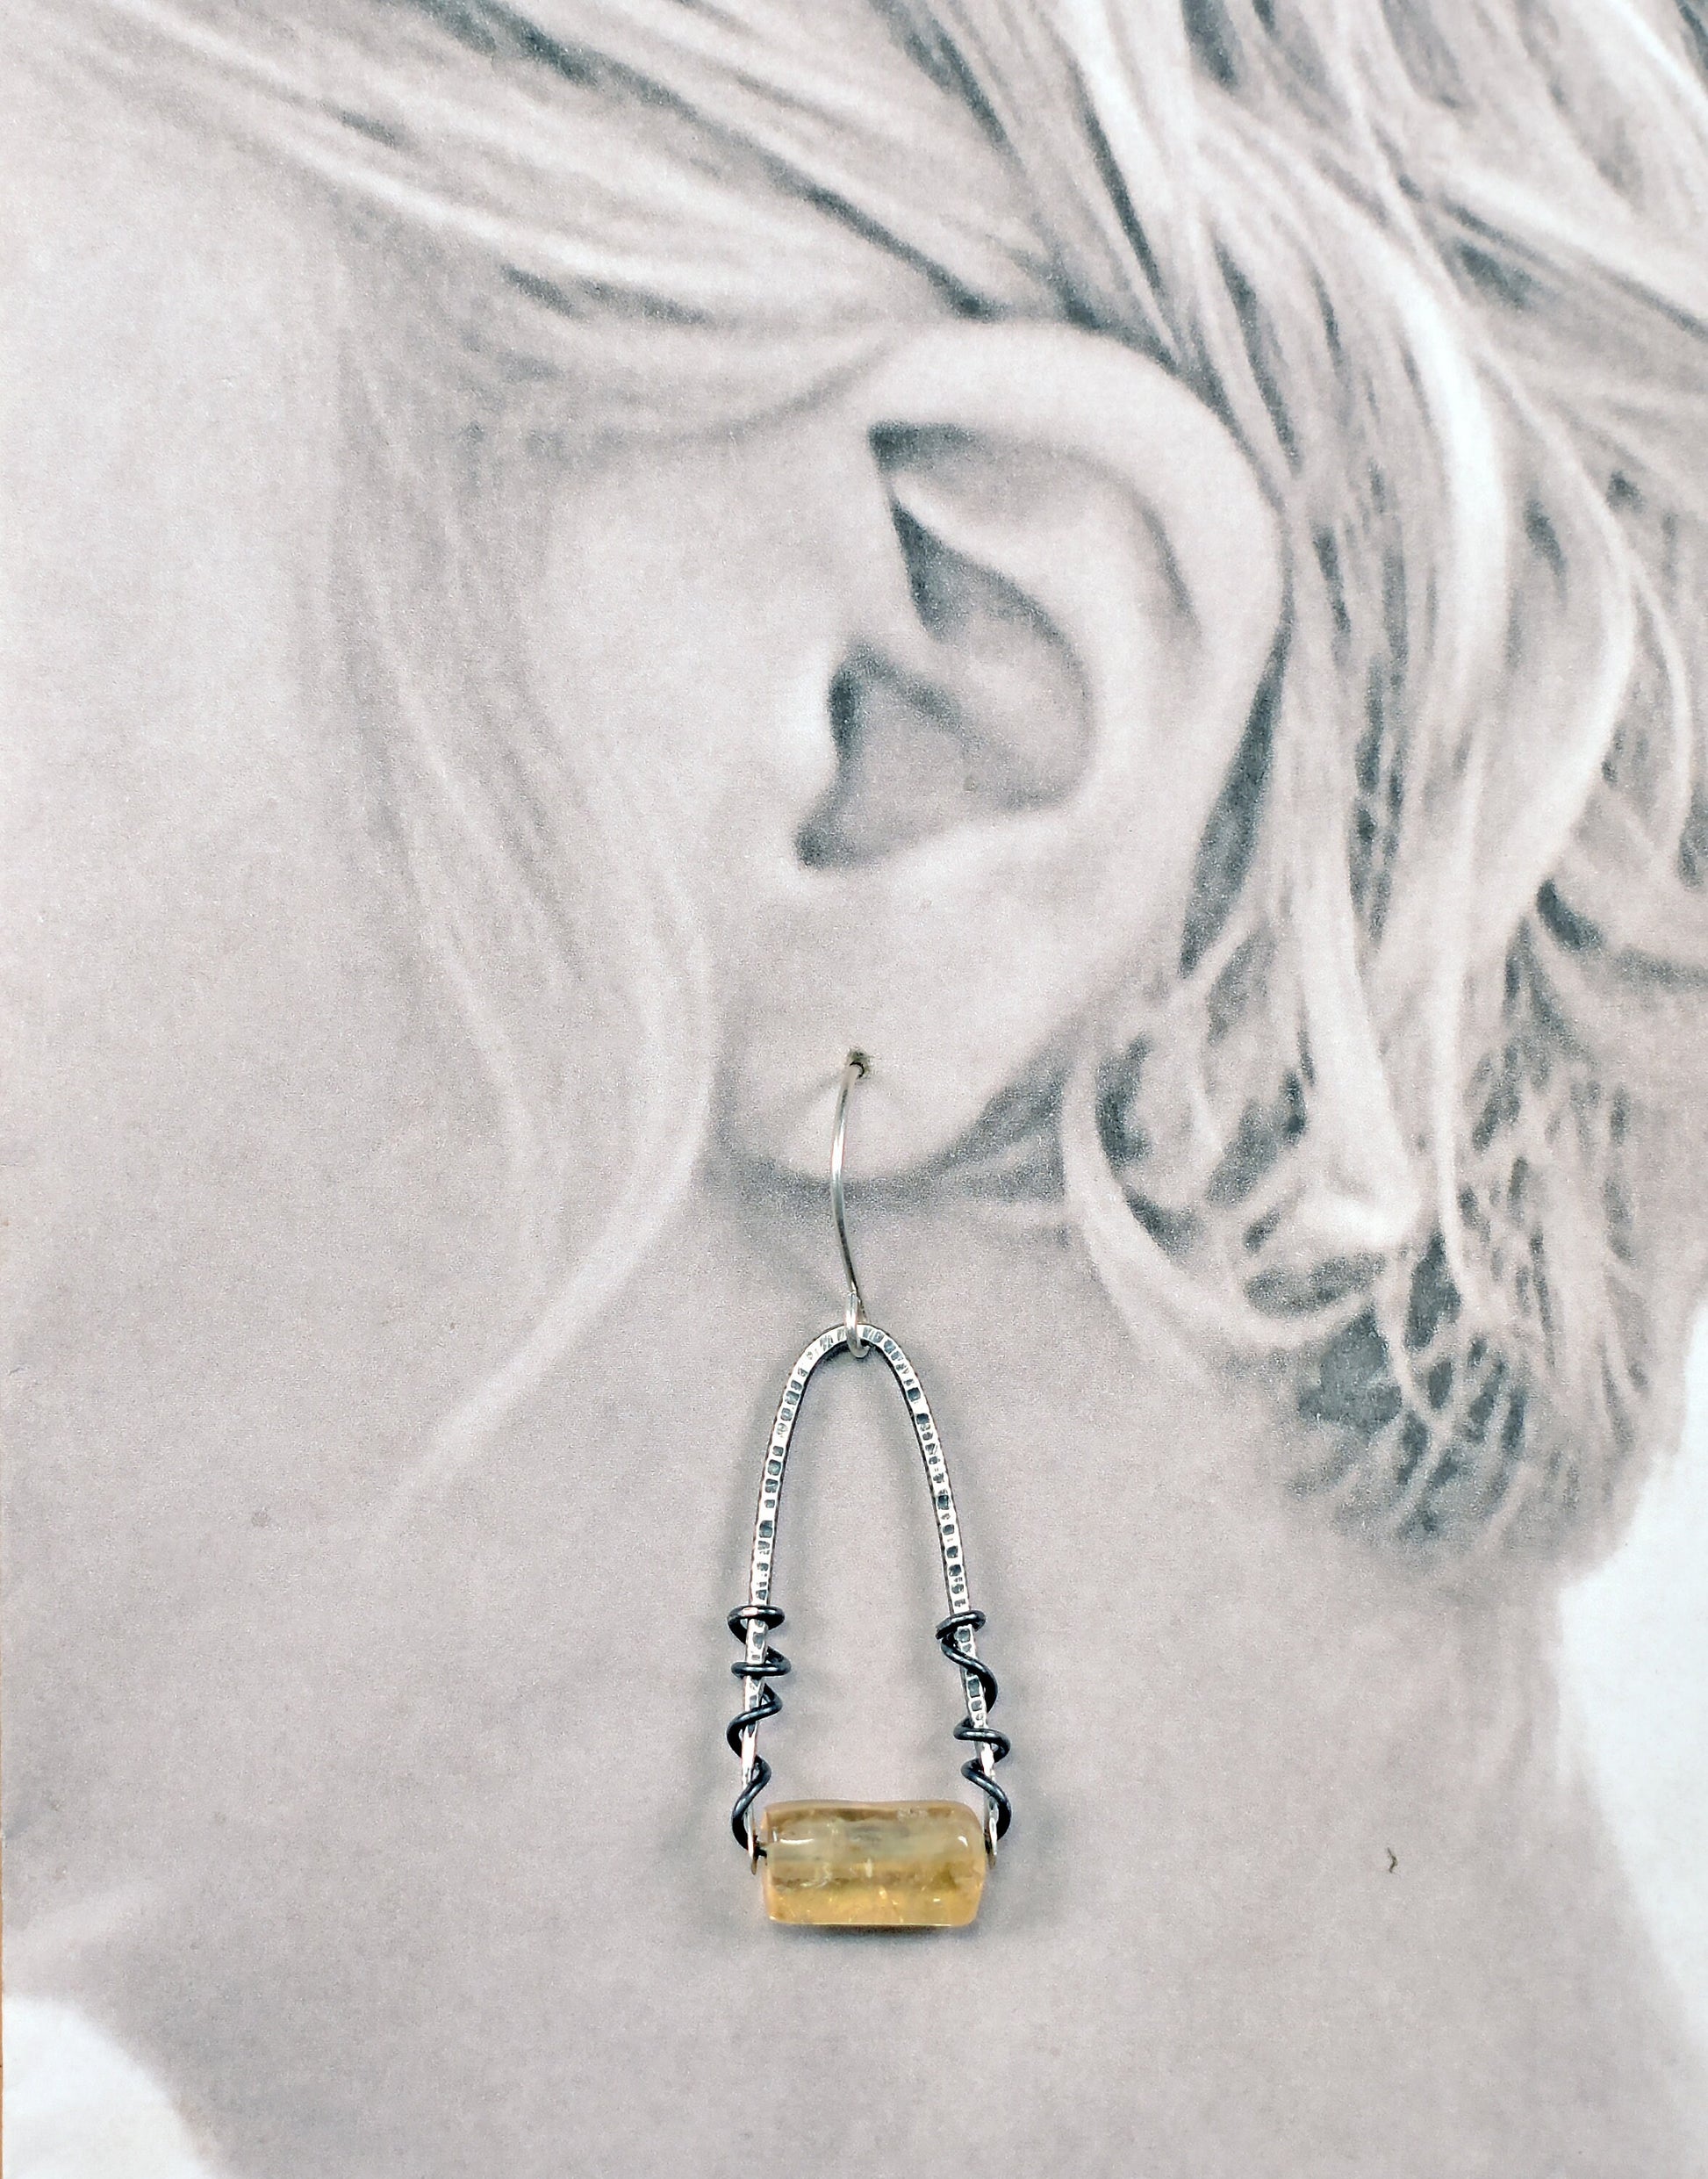 Citrine Sterling Silver Earrings, Simple Yellow Crystal Dangles, Unique Rustic Gemstone Jewelry, November Birthstone